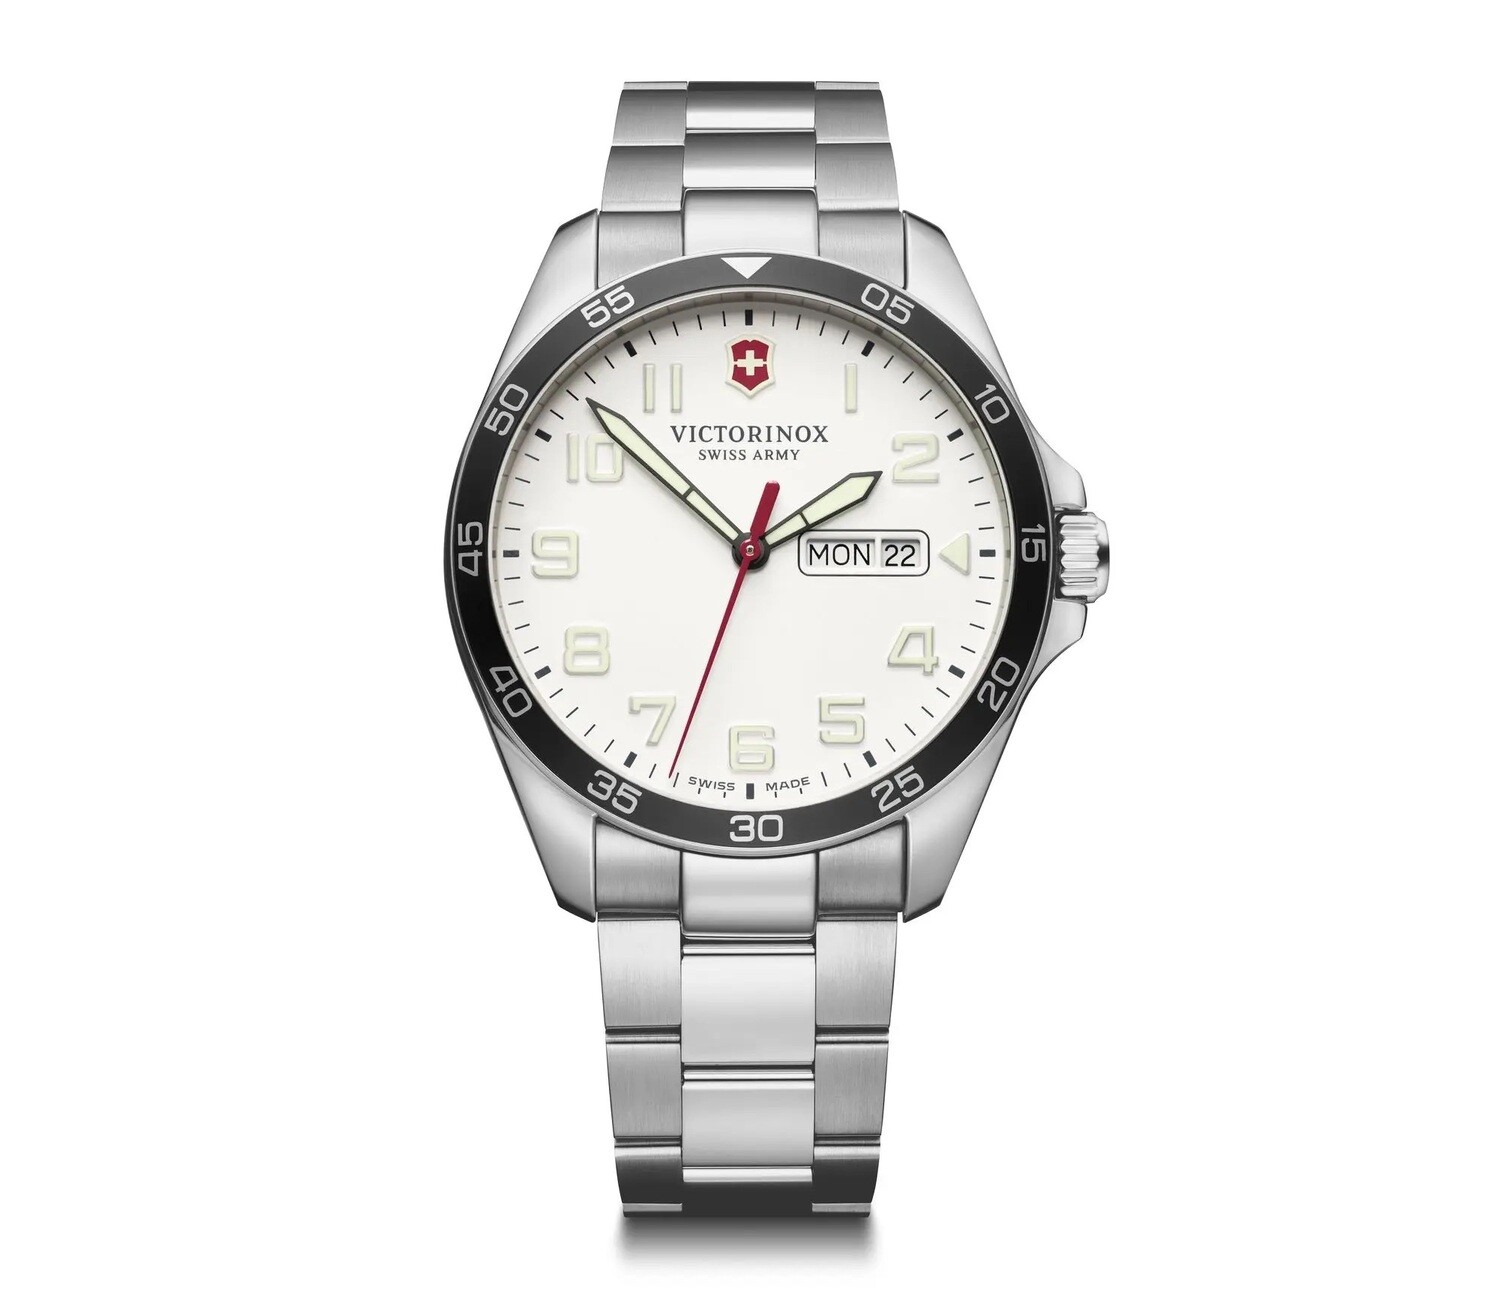 Reloj Victorinox Swiss Army FieldForce
241850 42mm Acero inoxidable Esfera blanca reloj deportivo de los hombres de cuarzo 100m WR cristal de zafiro SWISS MADE